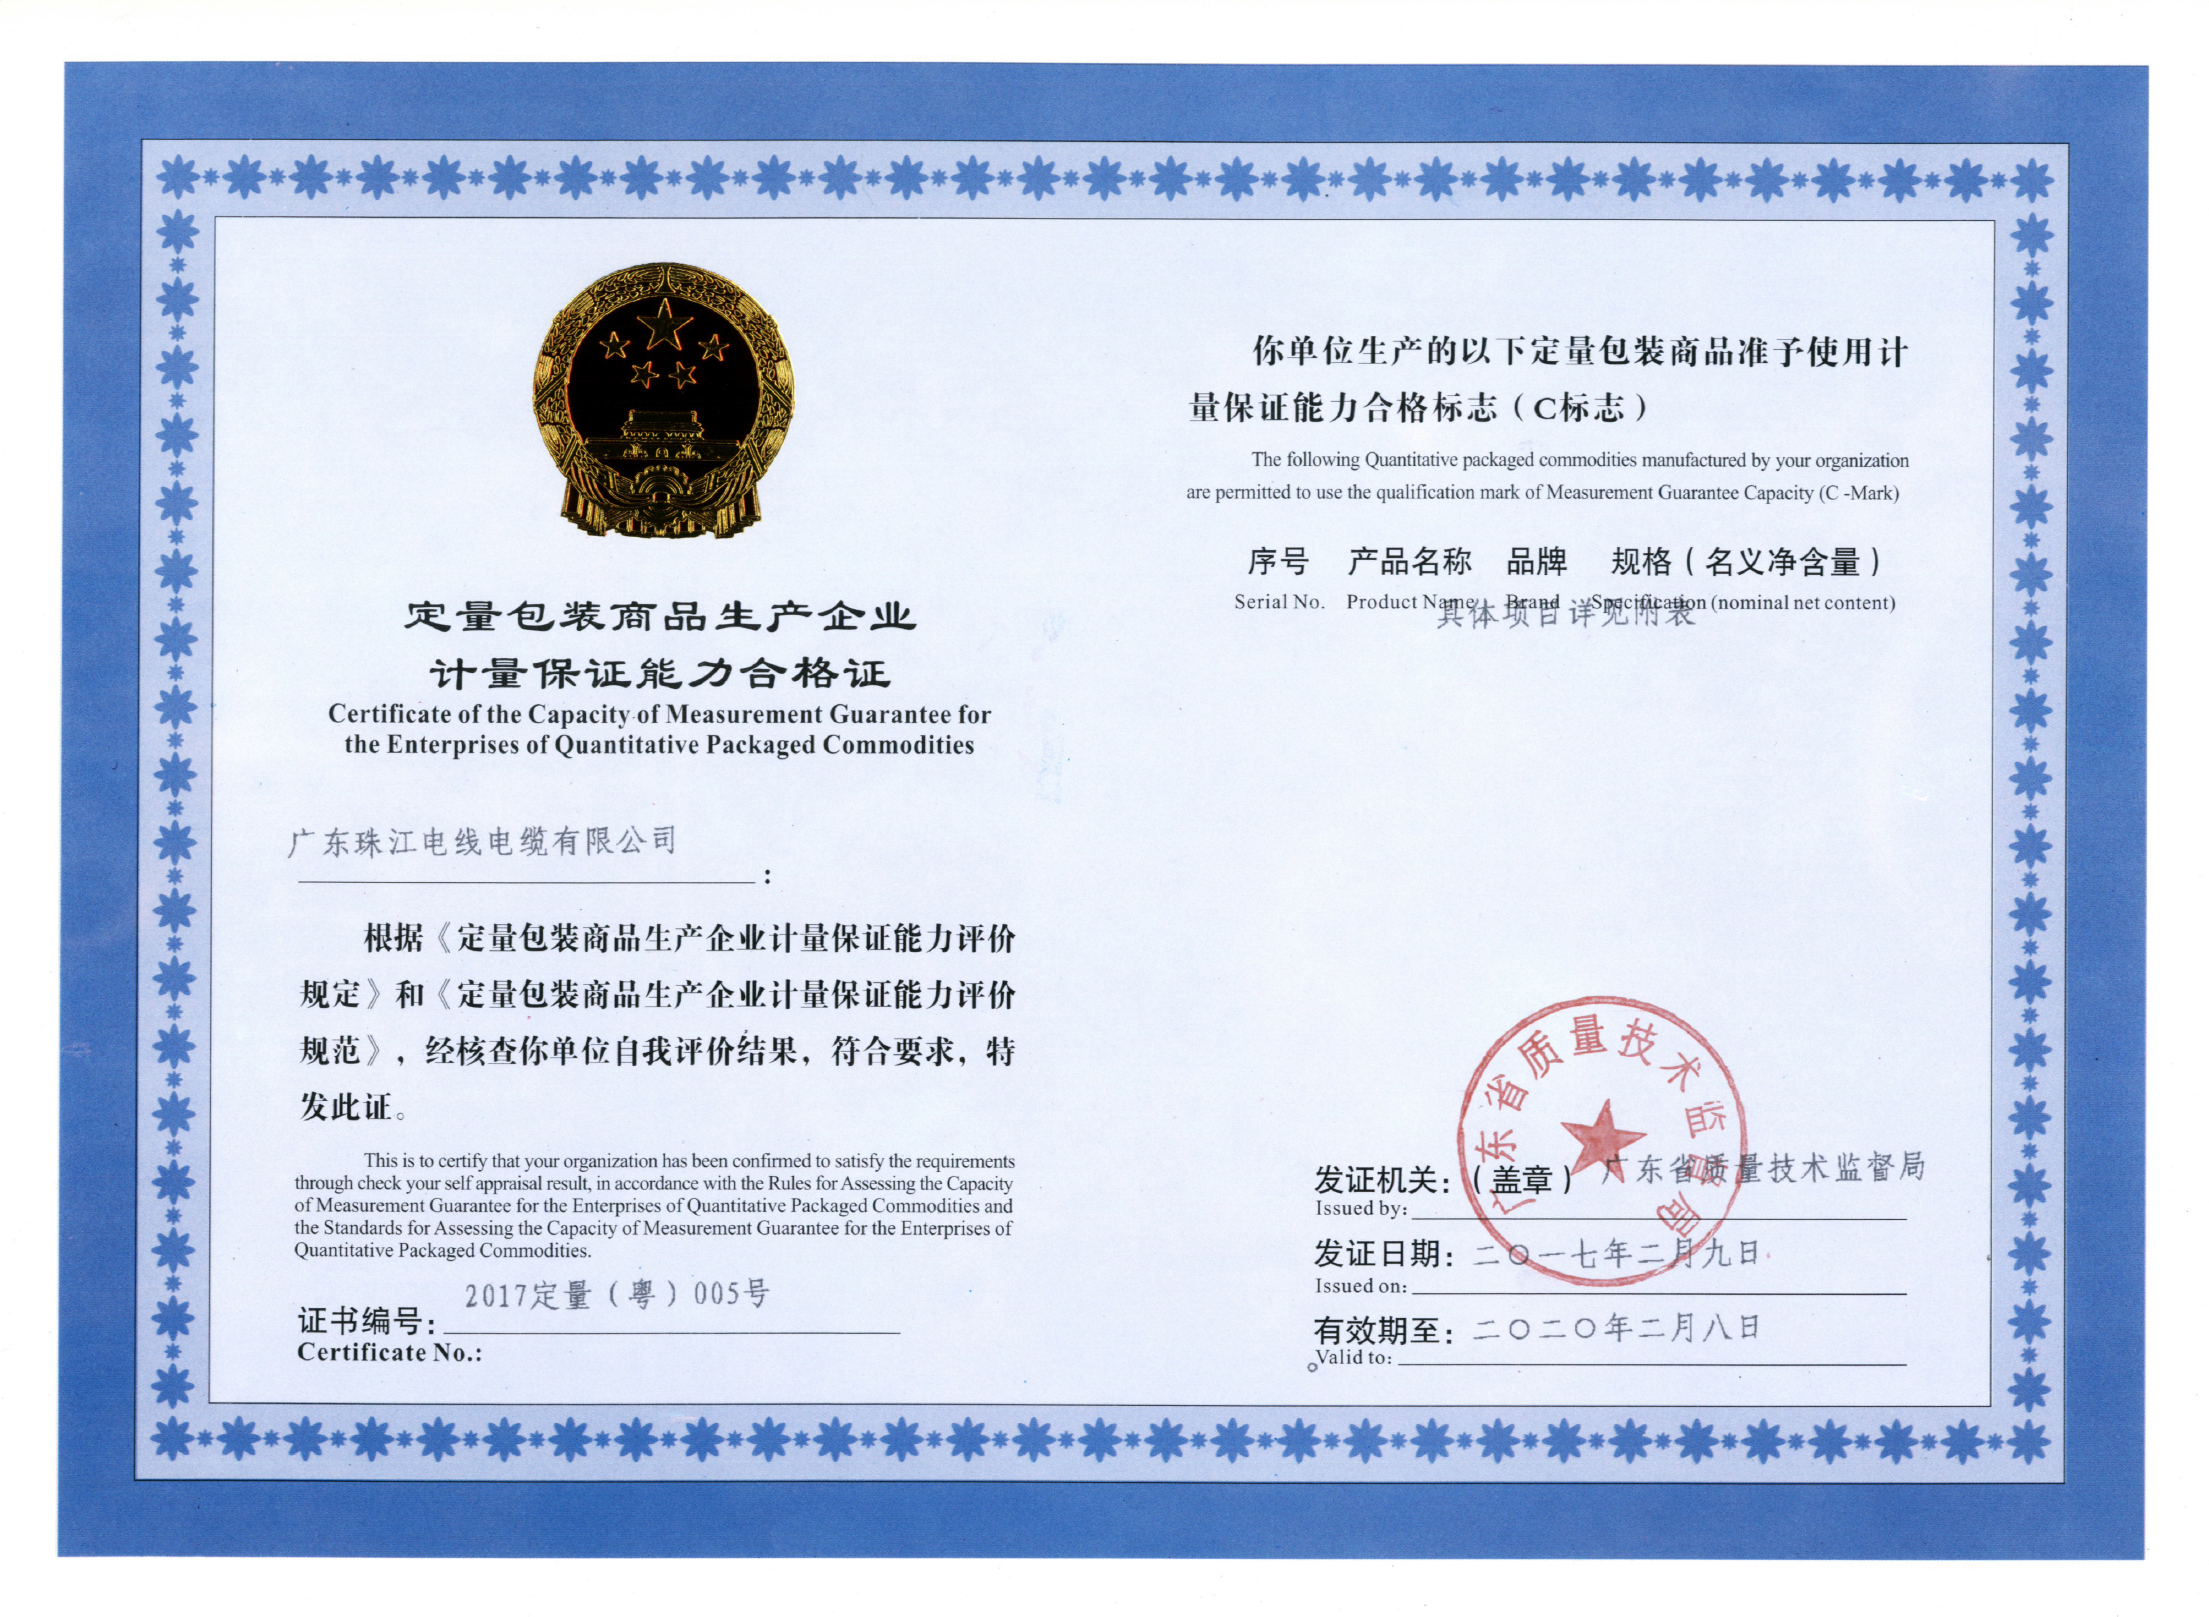 Quantitative packaging commodity manufacturing enterprise measurement assurance ability certificate (C mark)